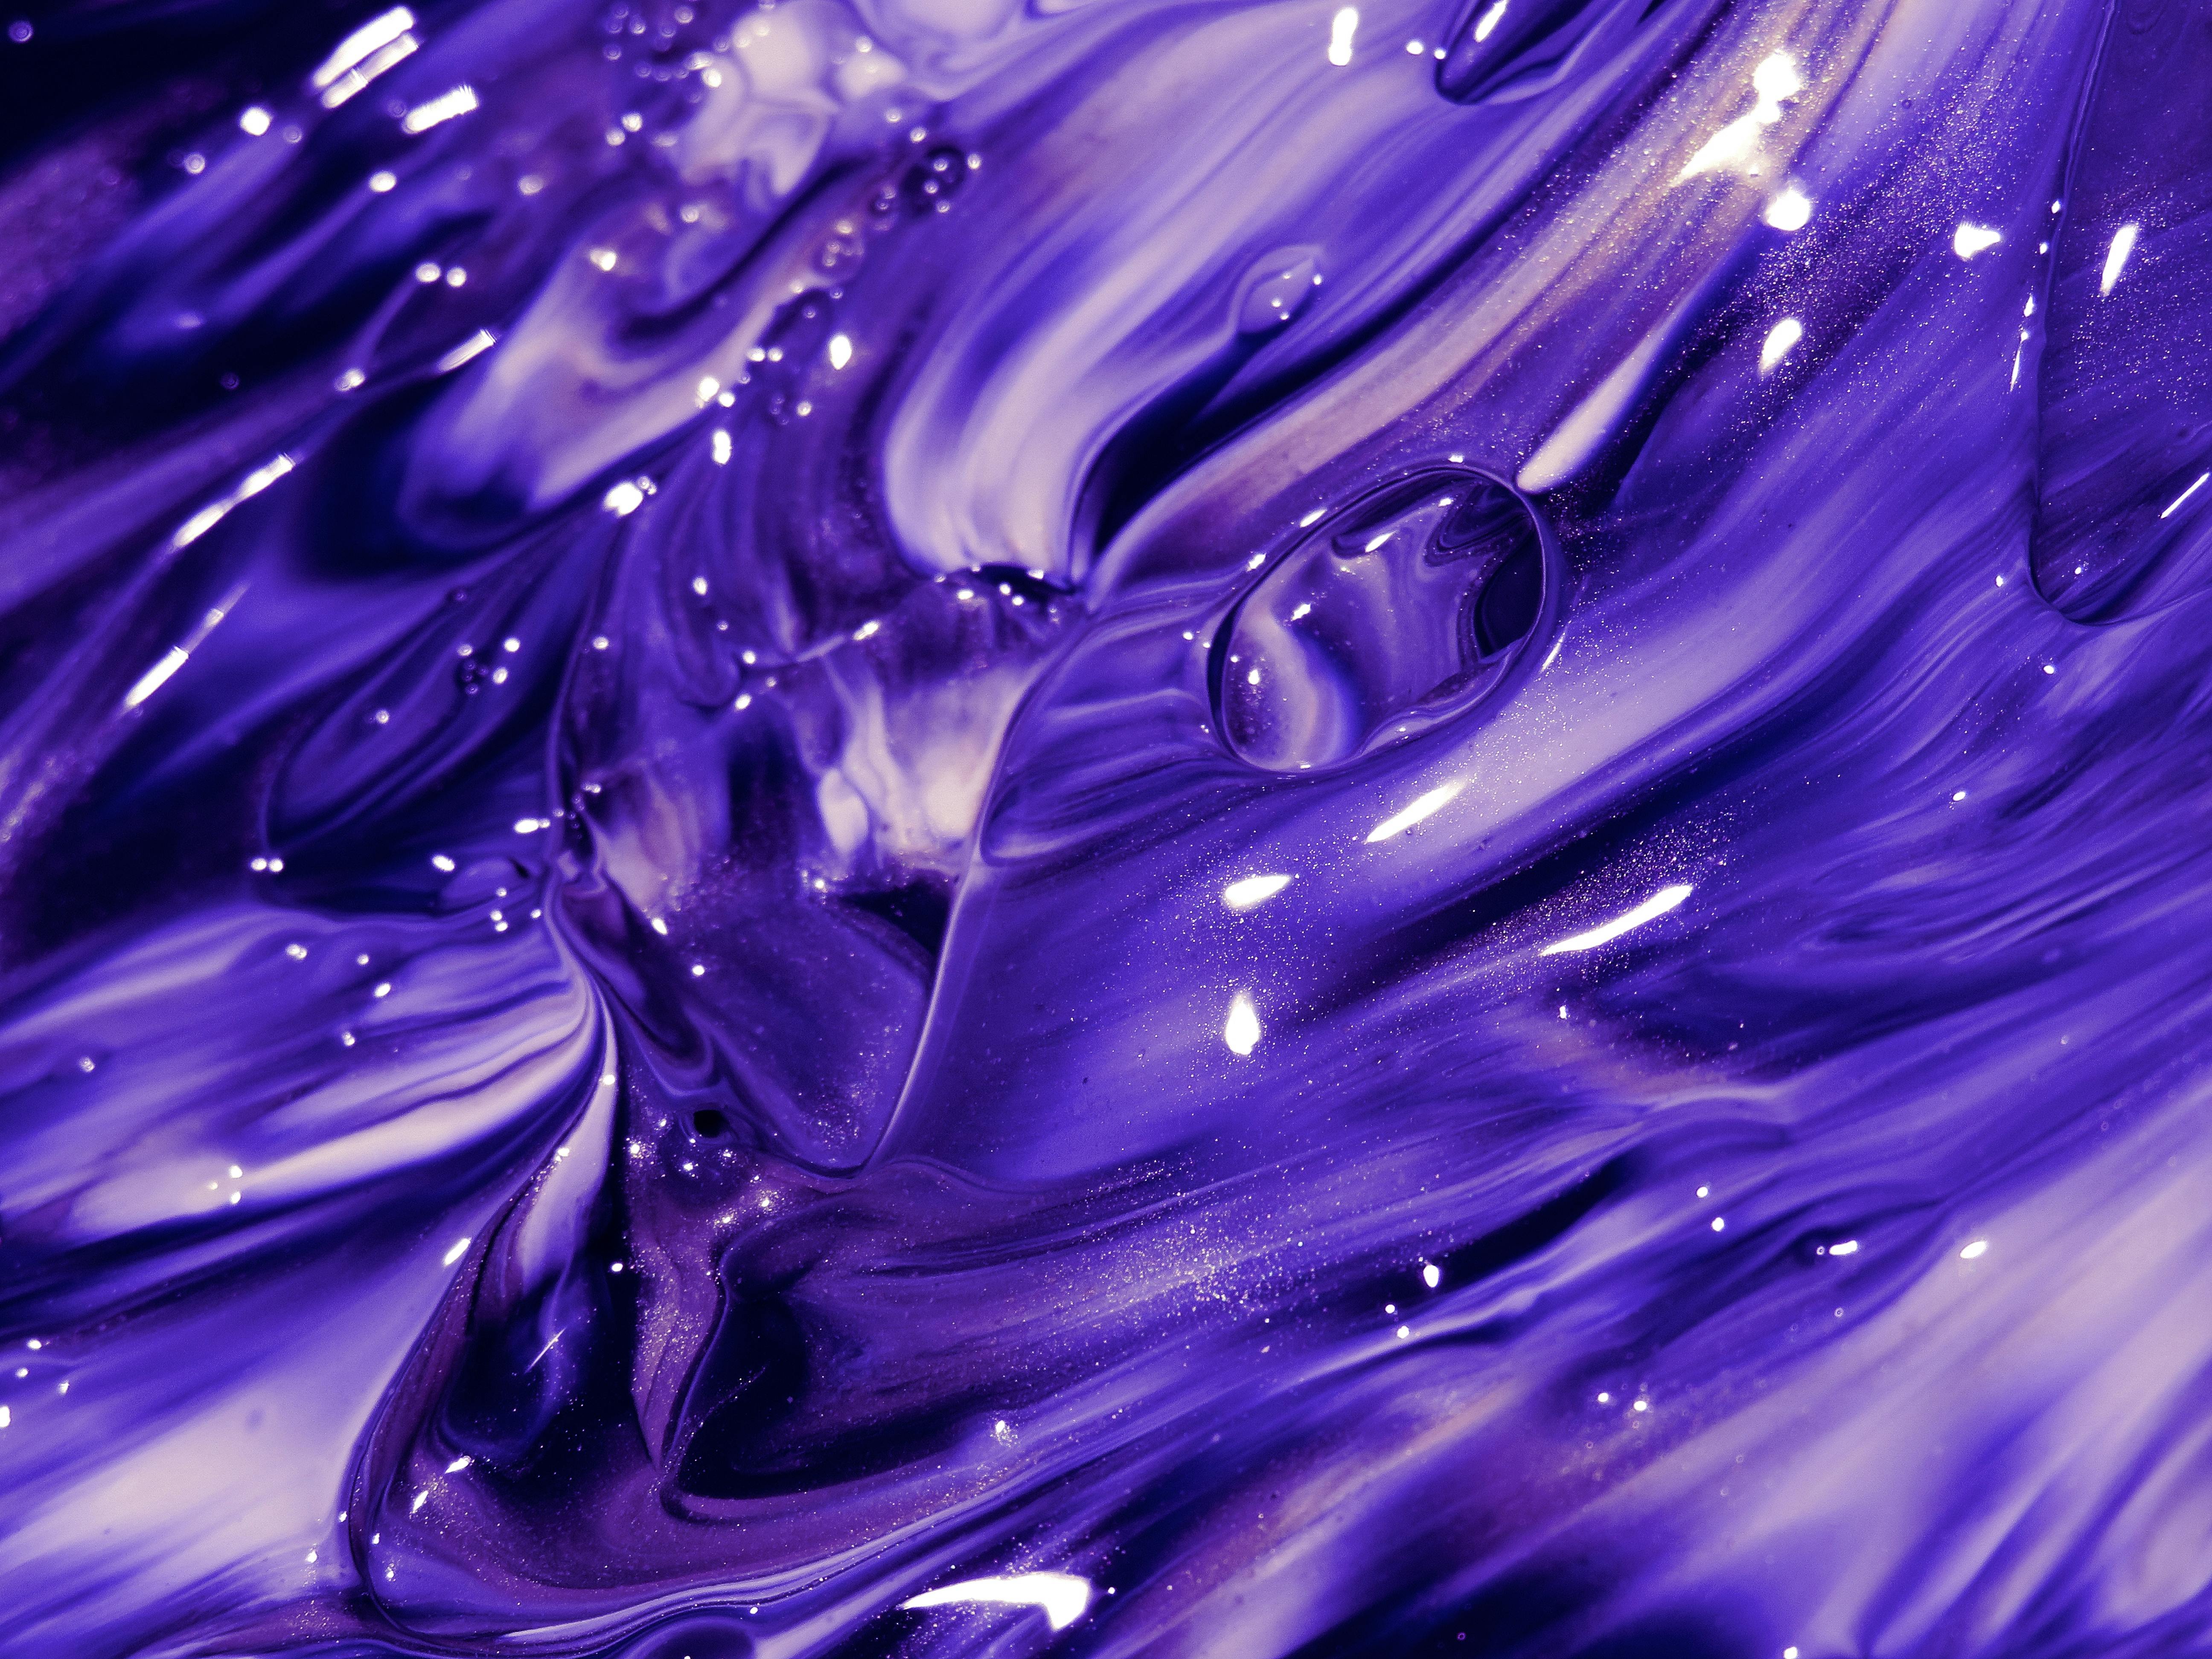 Purple Wallpaper Photos, Download The BEST Free Purple Wallpaper